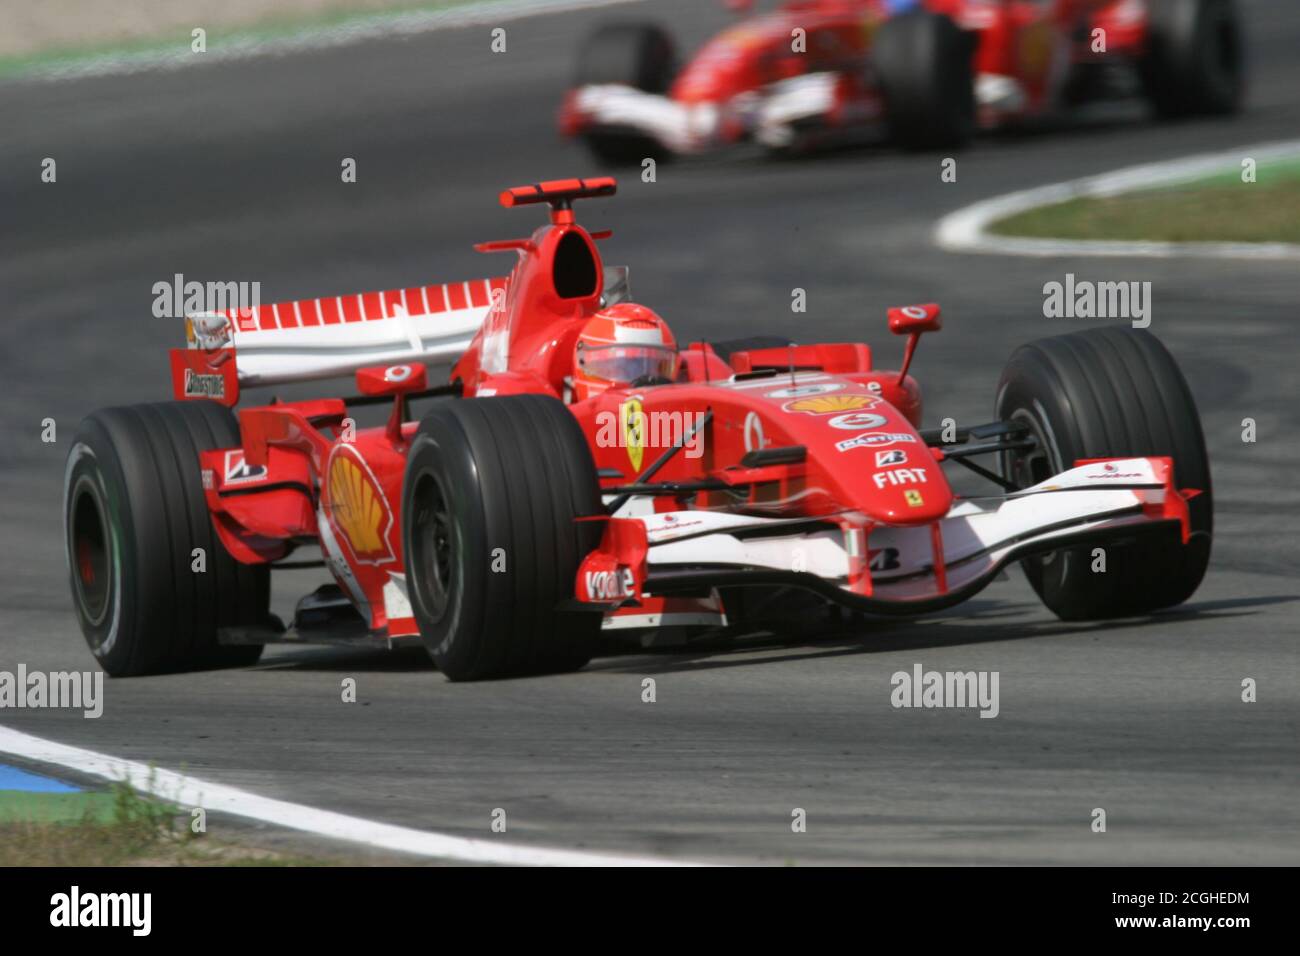 Michael Schumacher, GER, Scuderia Ferrari, F1, Grand Prix of Germany 2006 Stock Photo